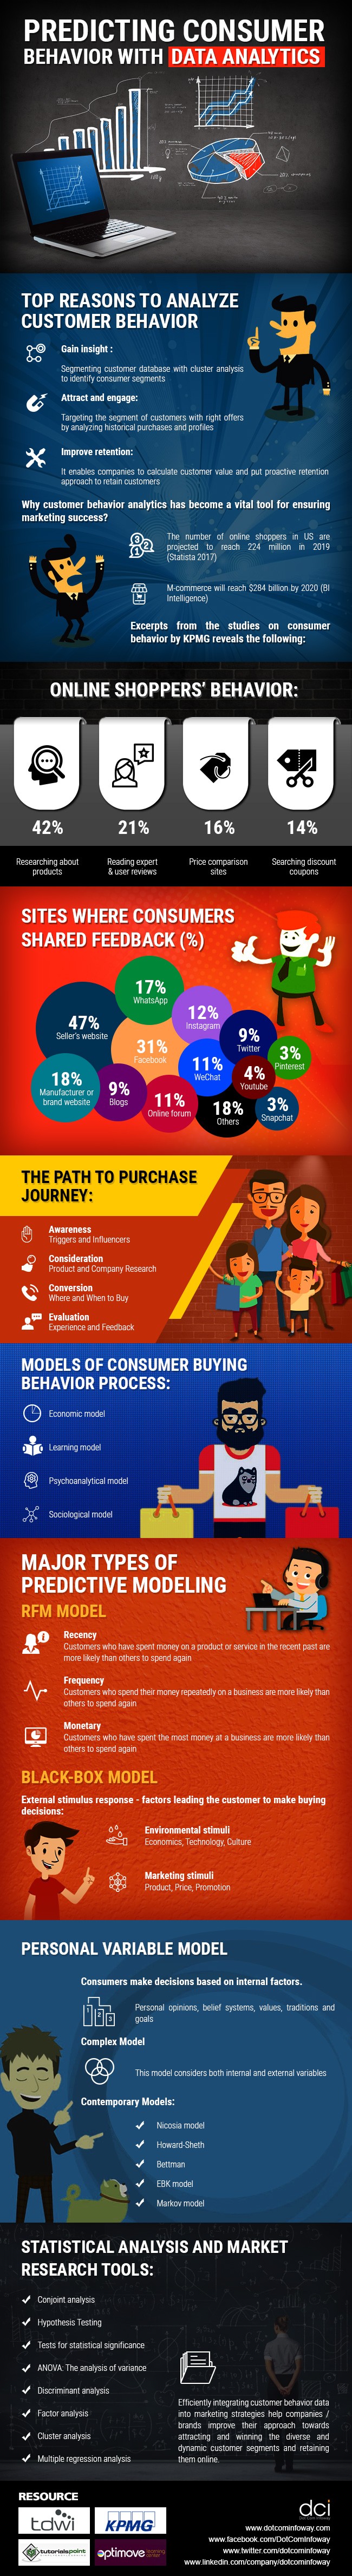 Predicting Consumer Behavior with Data Analytics [Infographic]